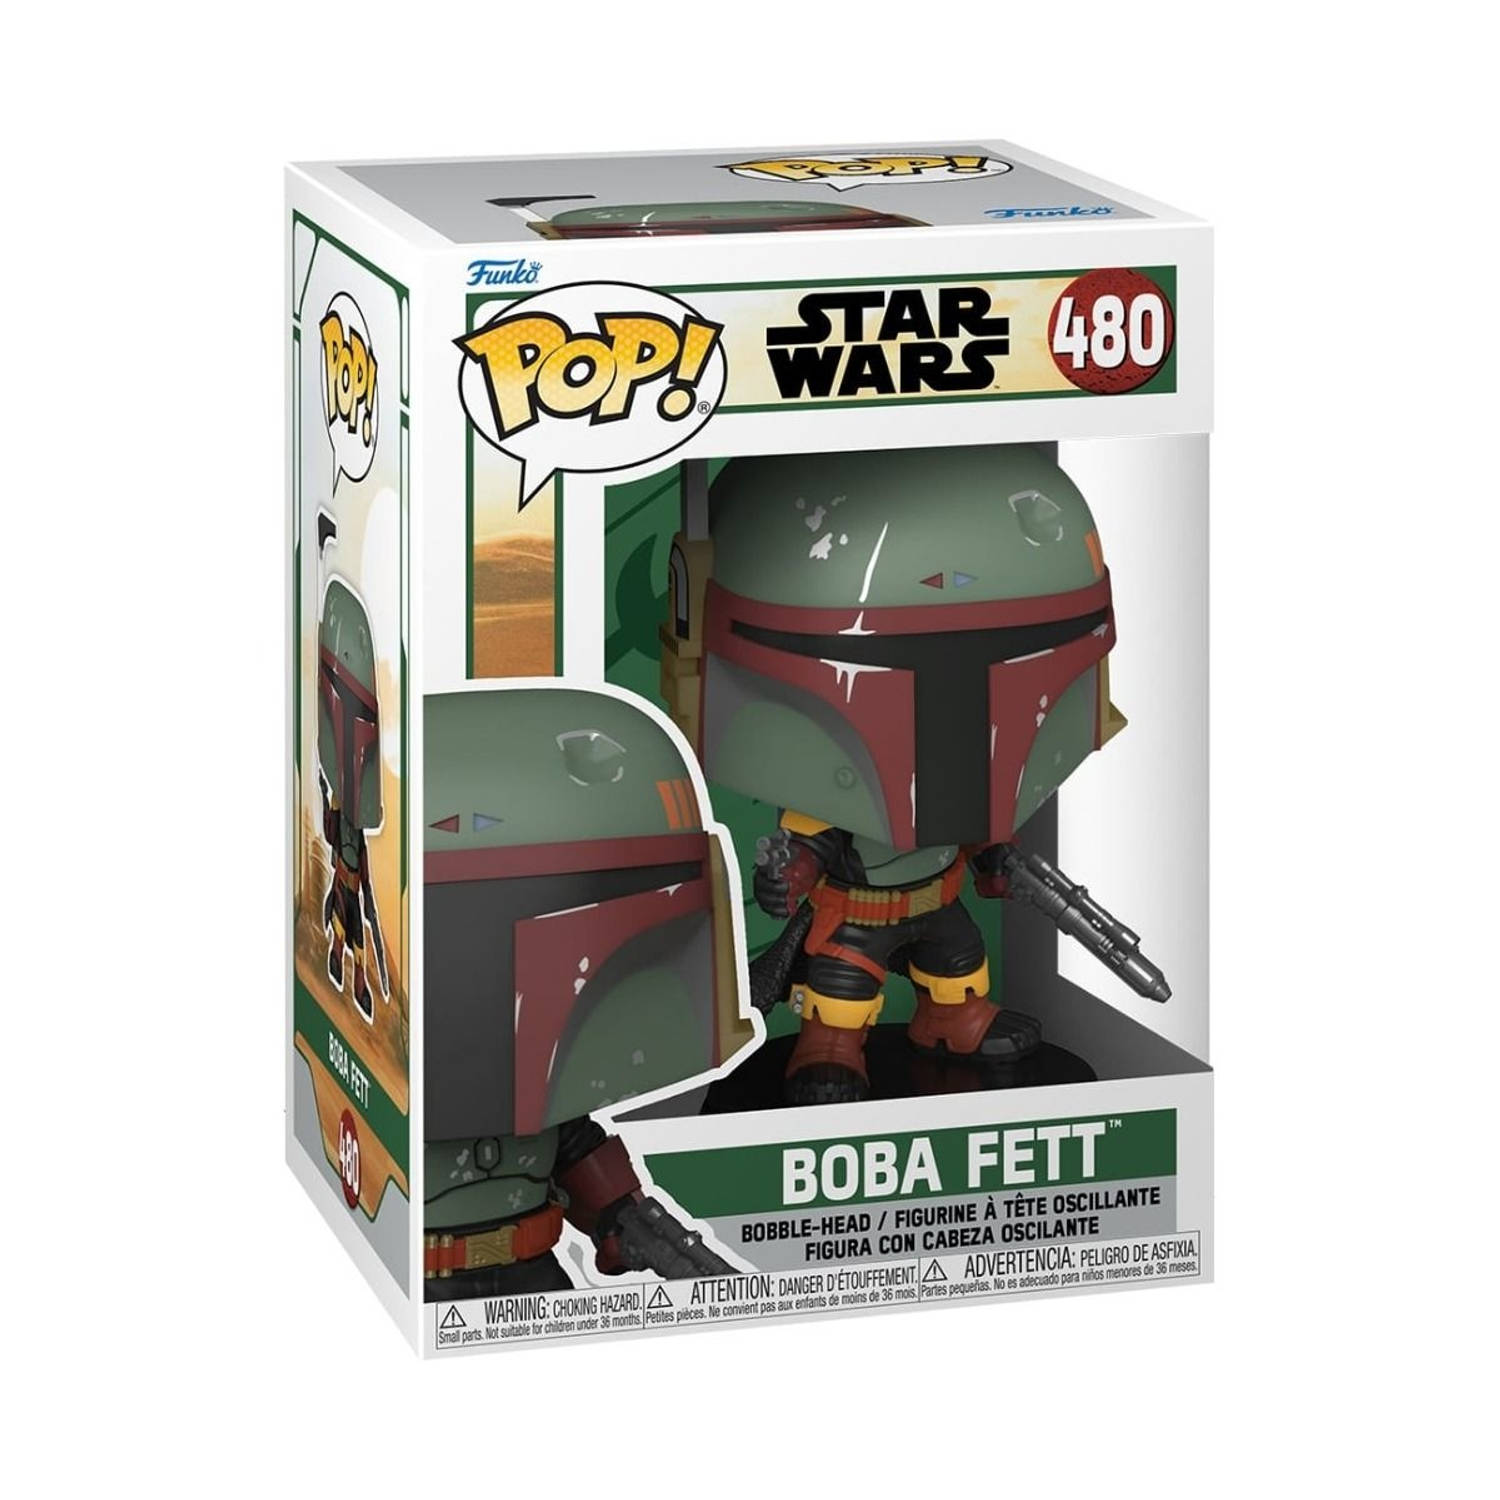 Star Wars: The Book of Boba Fett Bobble-Head Funko Pop #480